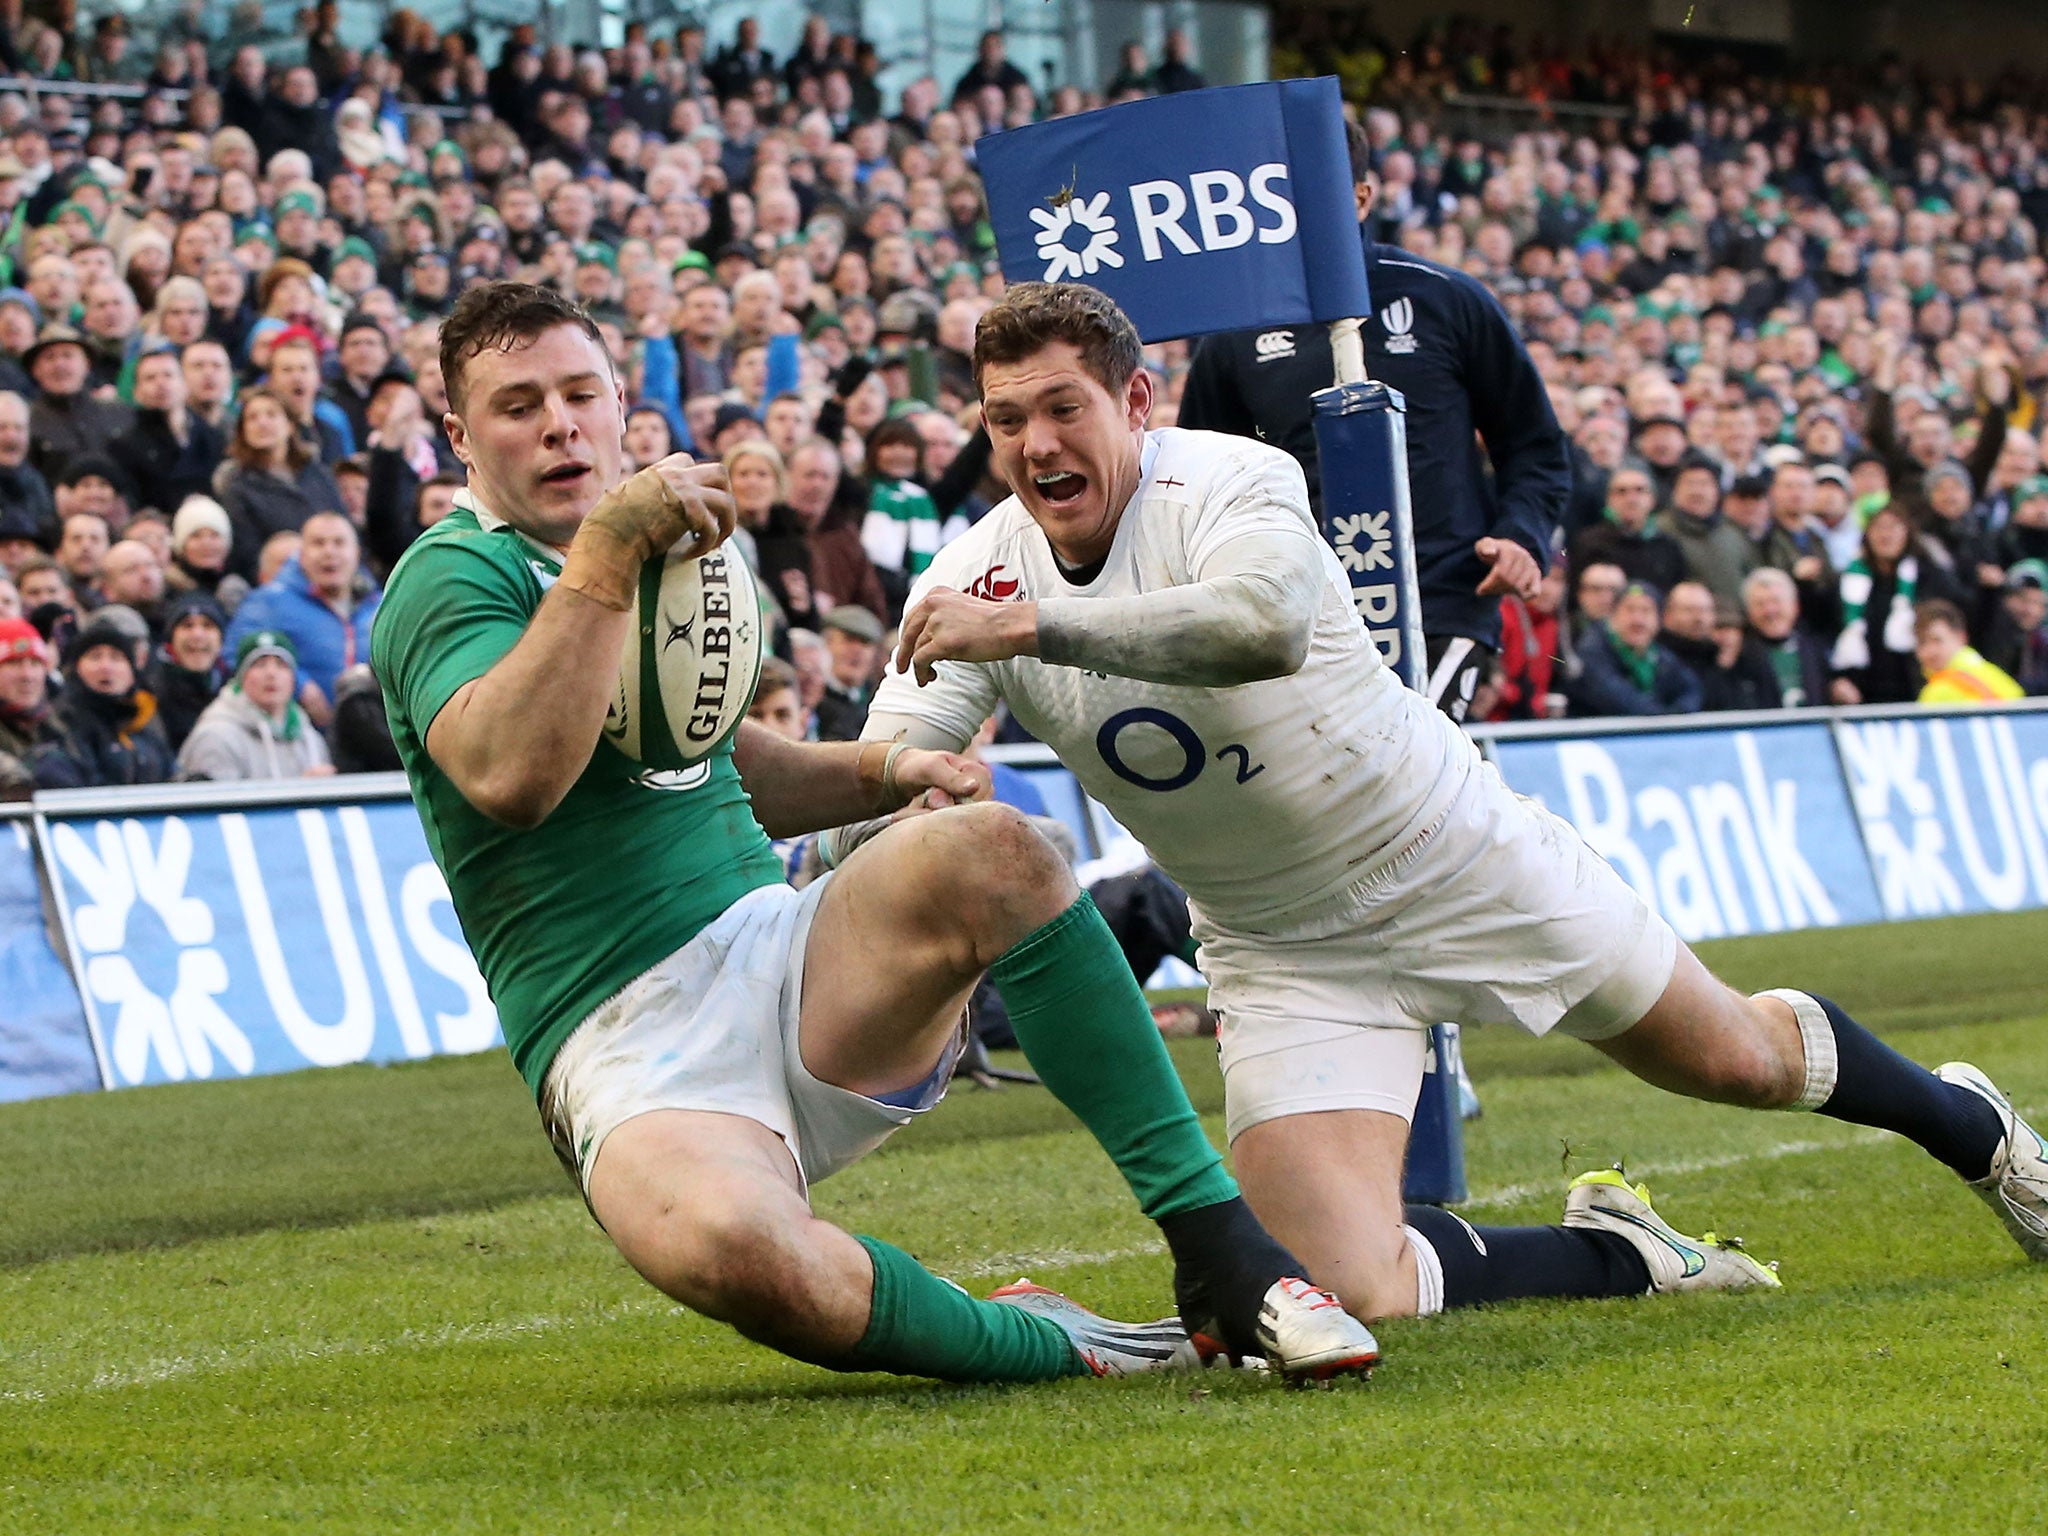 Robbie Henshaw crosses the line for Ireland